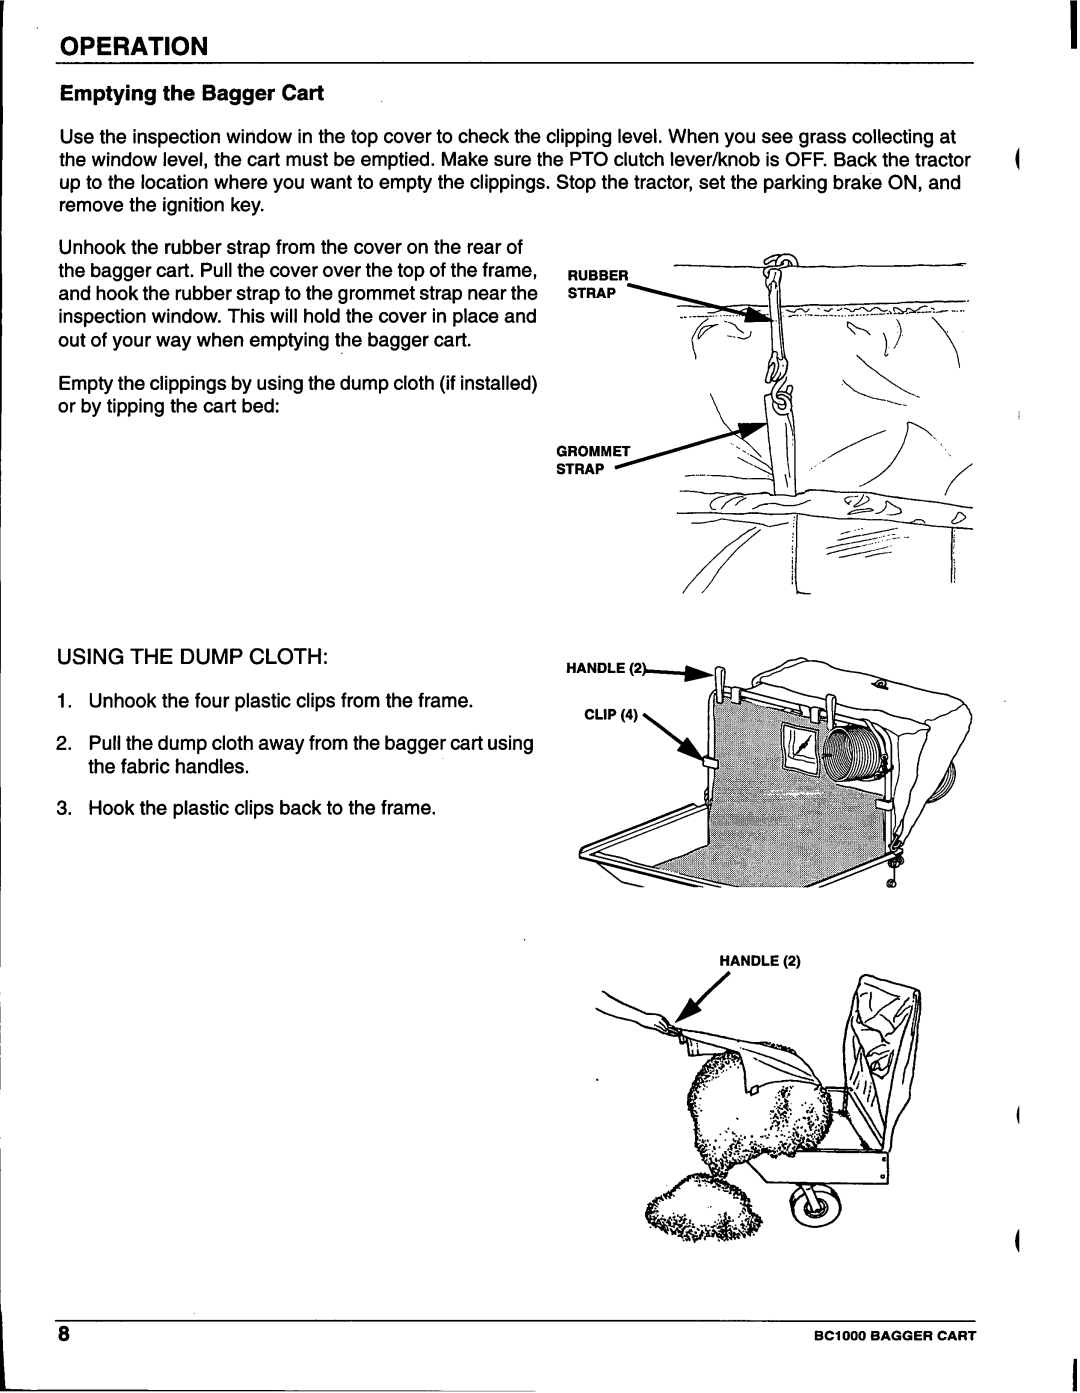 Honda Power Equipment BC100 manual Operation, Emptying the Bagger Cart, Using The Dump Cloth 